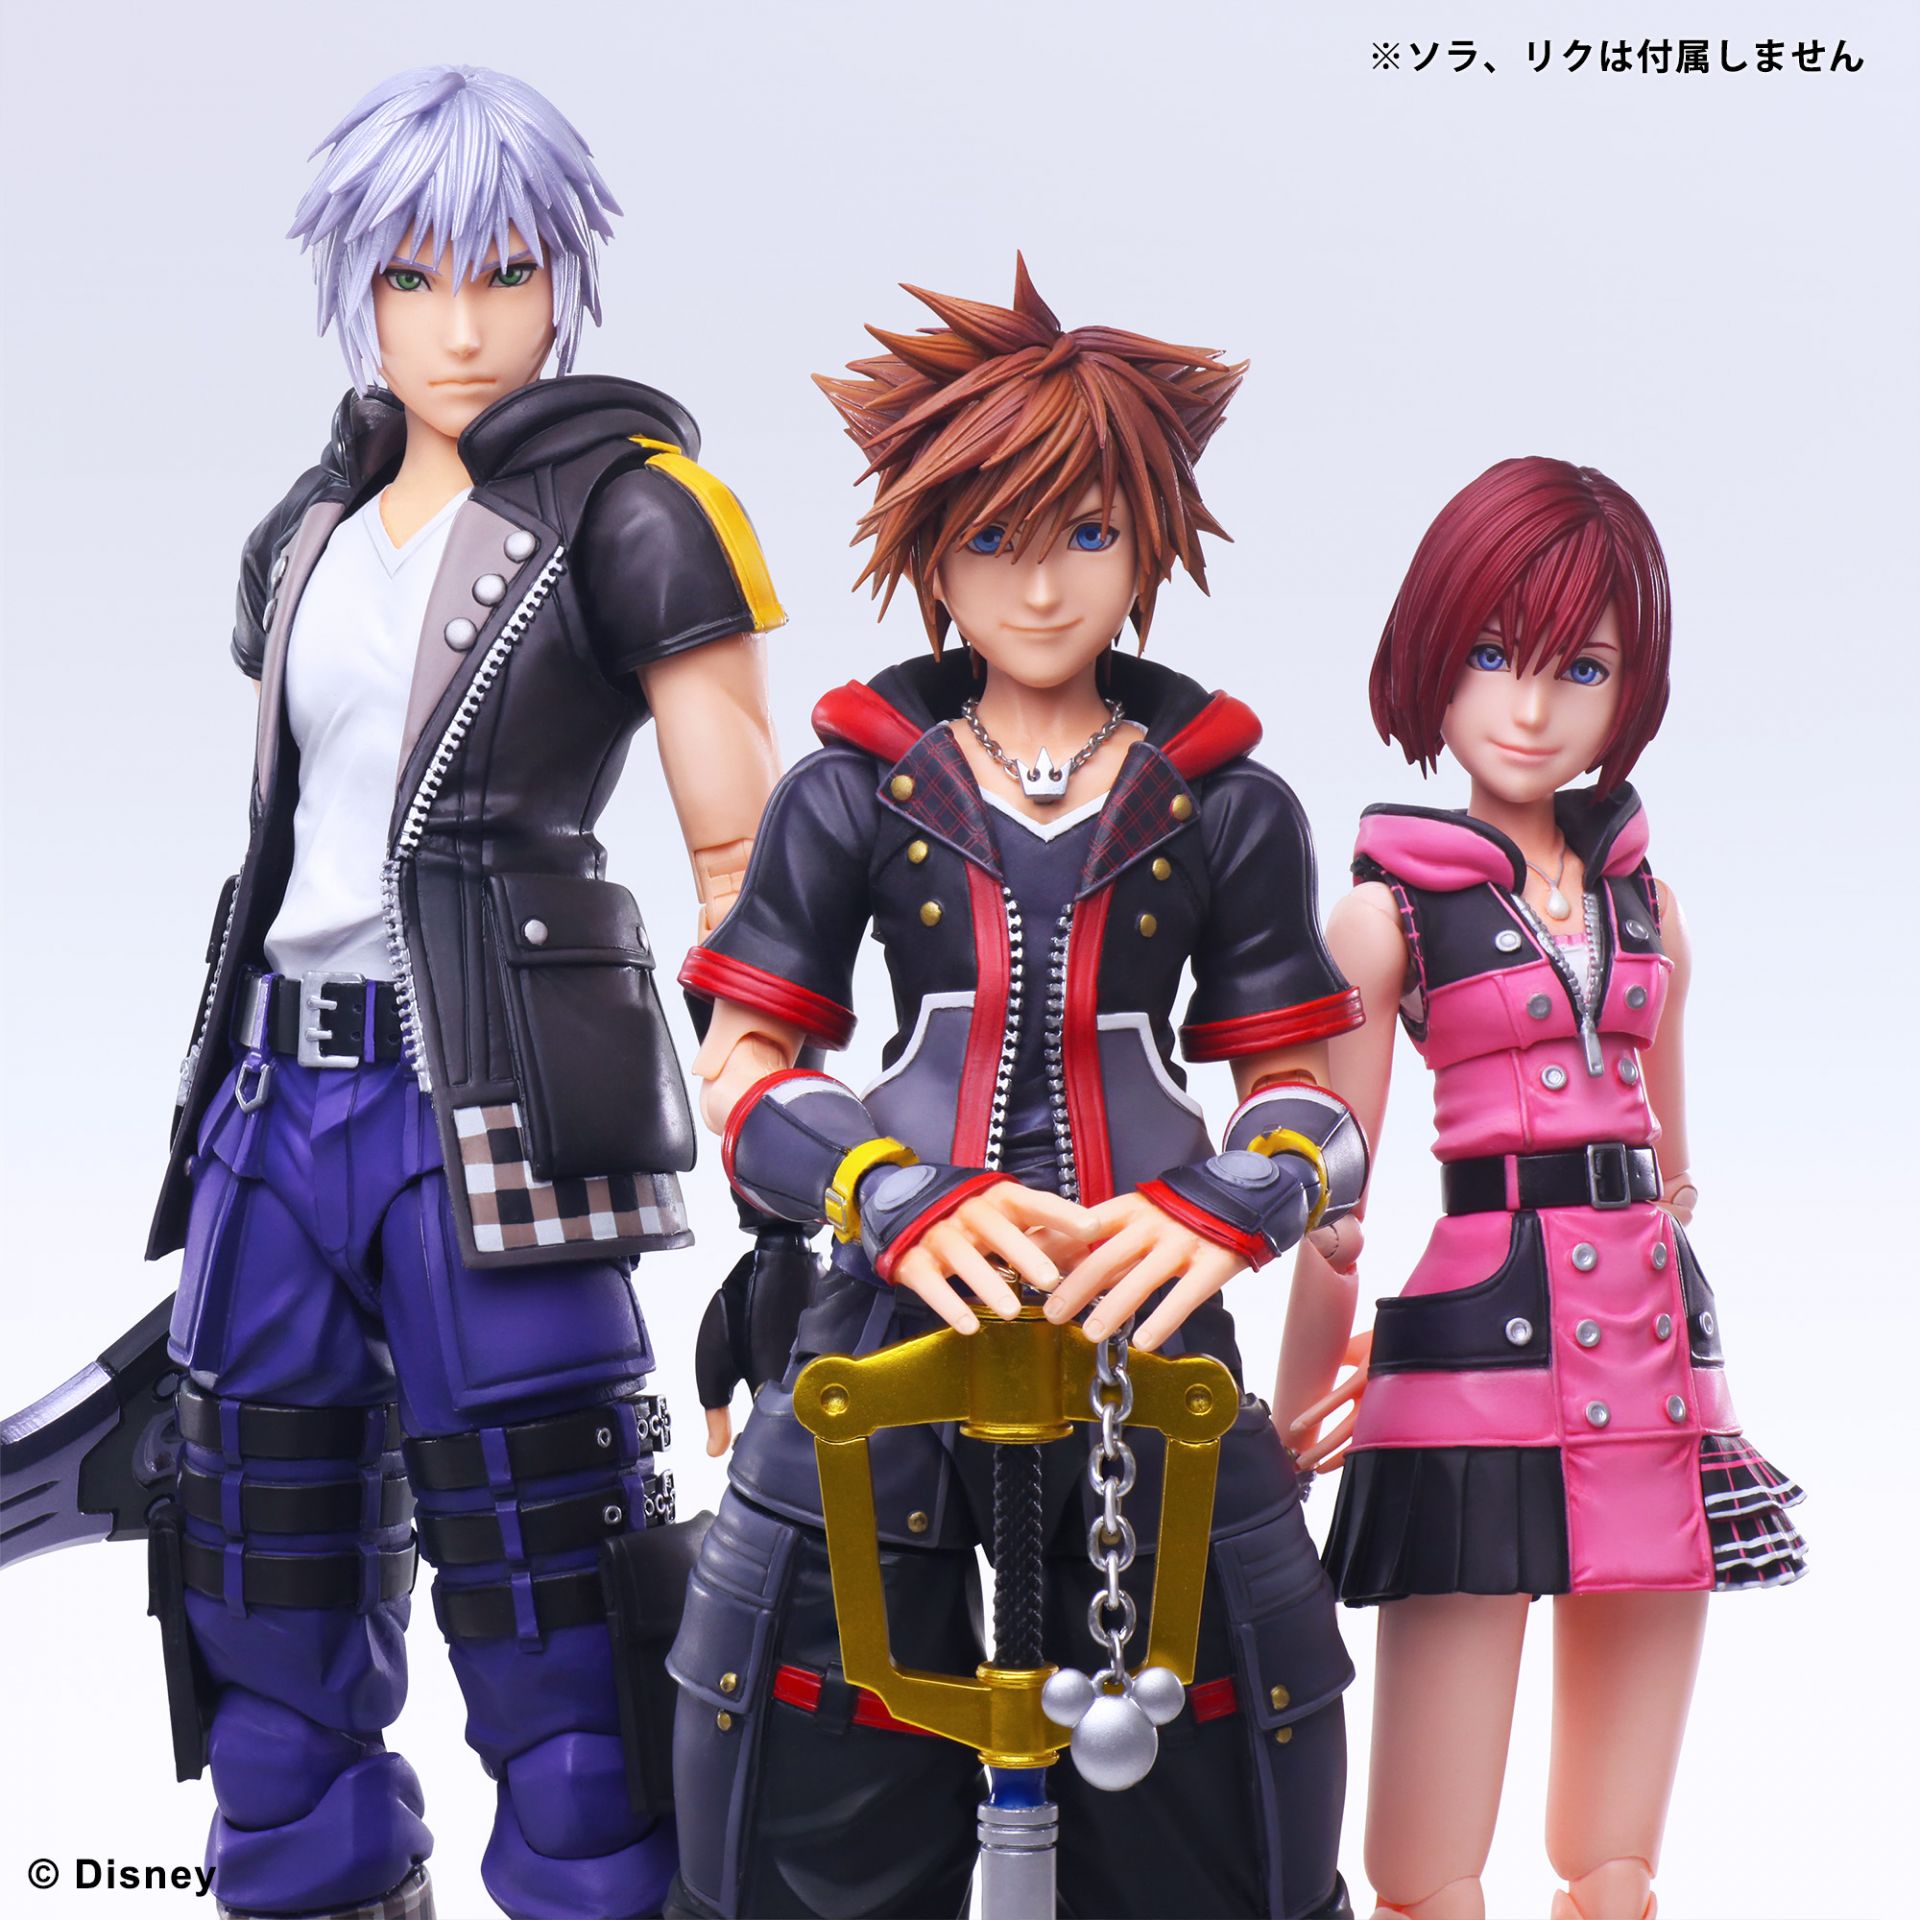 Kingdom Hearts III New Sora, Kairi & Riku Play Arts Kai Figures Announced; Pre-Orders Available